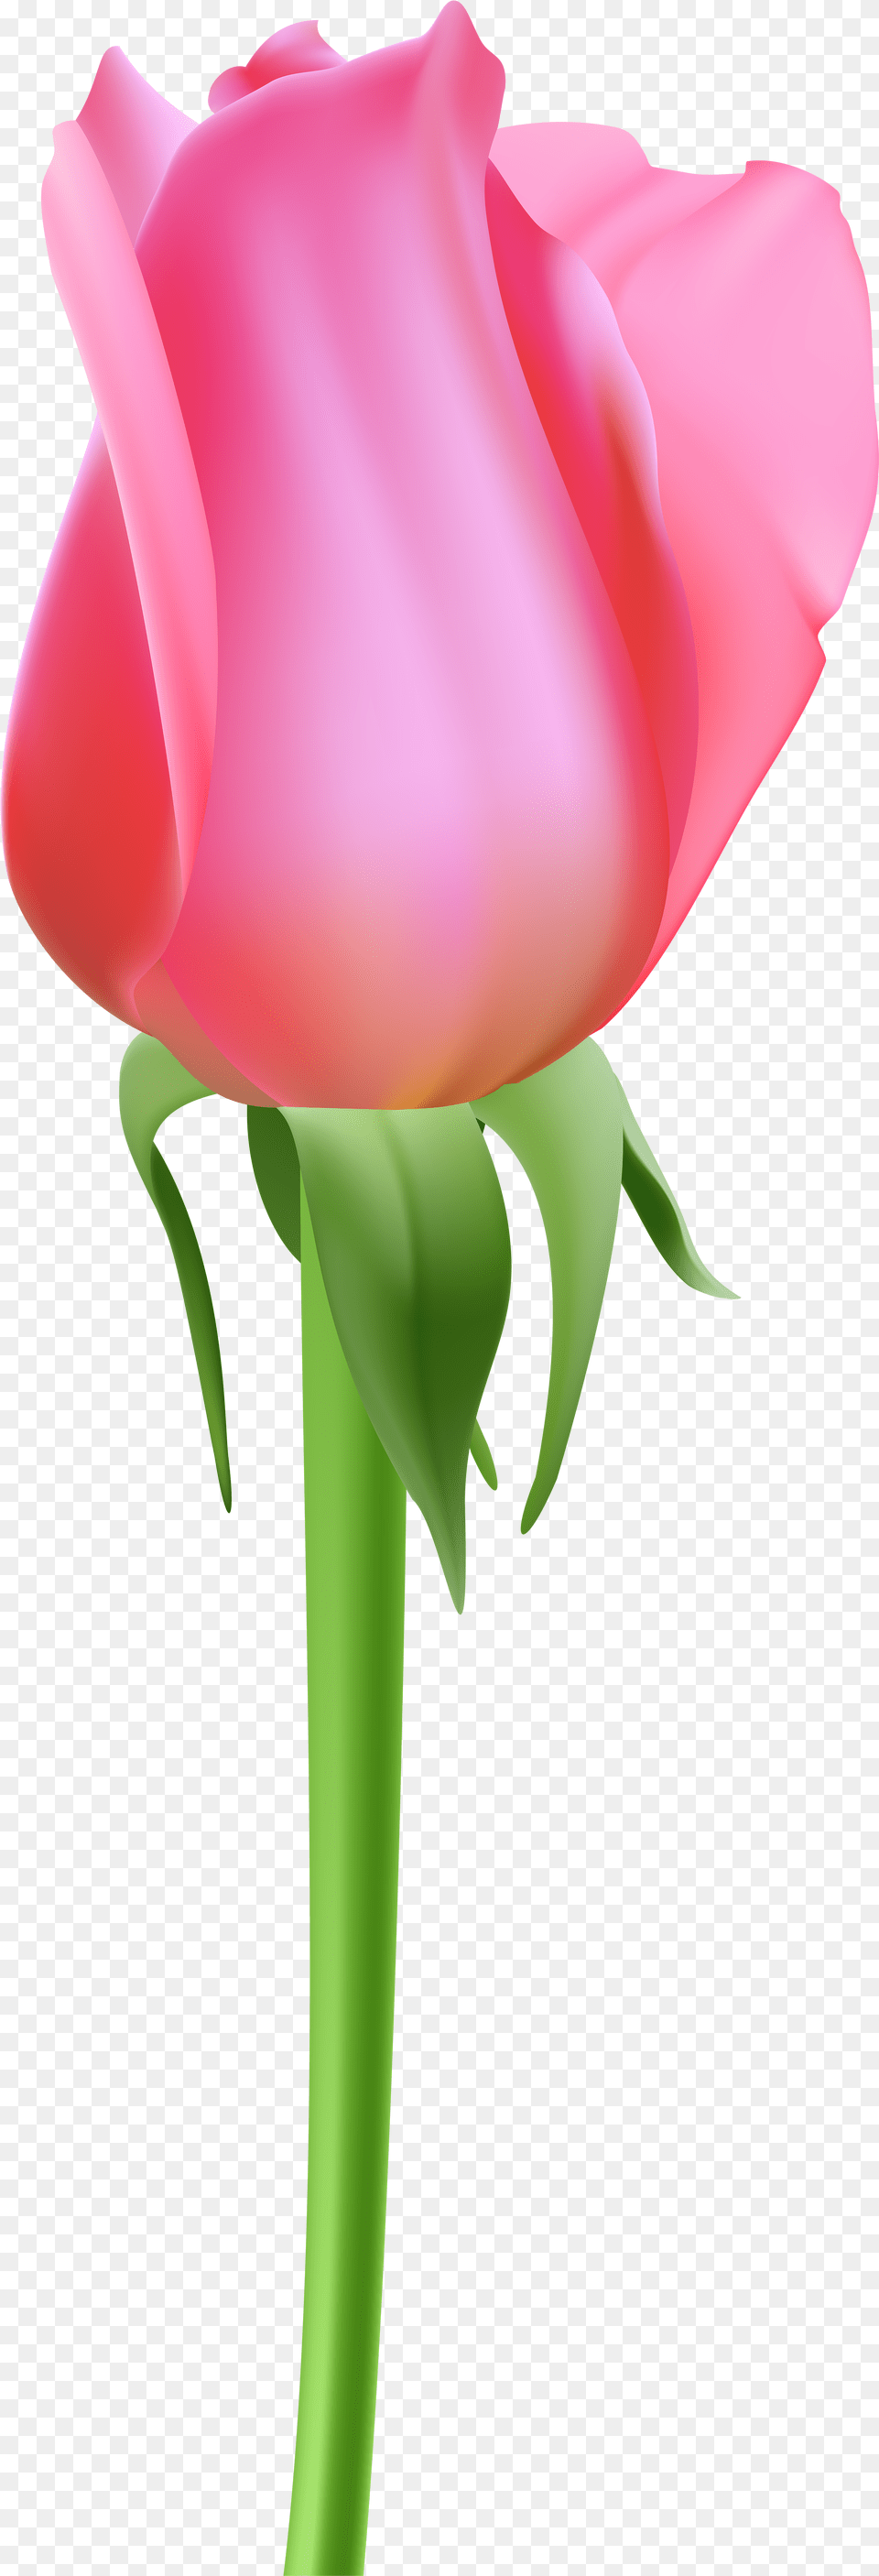 Rose Bud Tulip, Flower, Plant, Petal Free Transparent Png